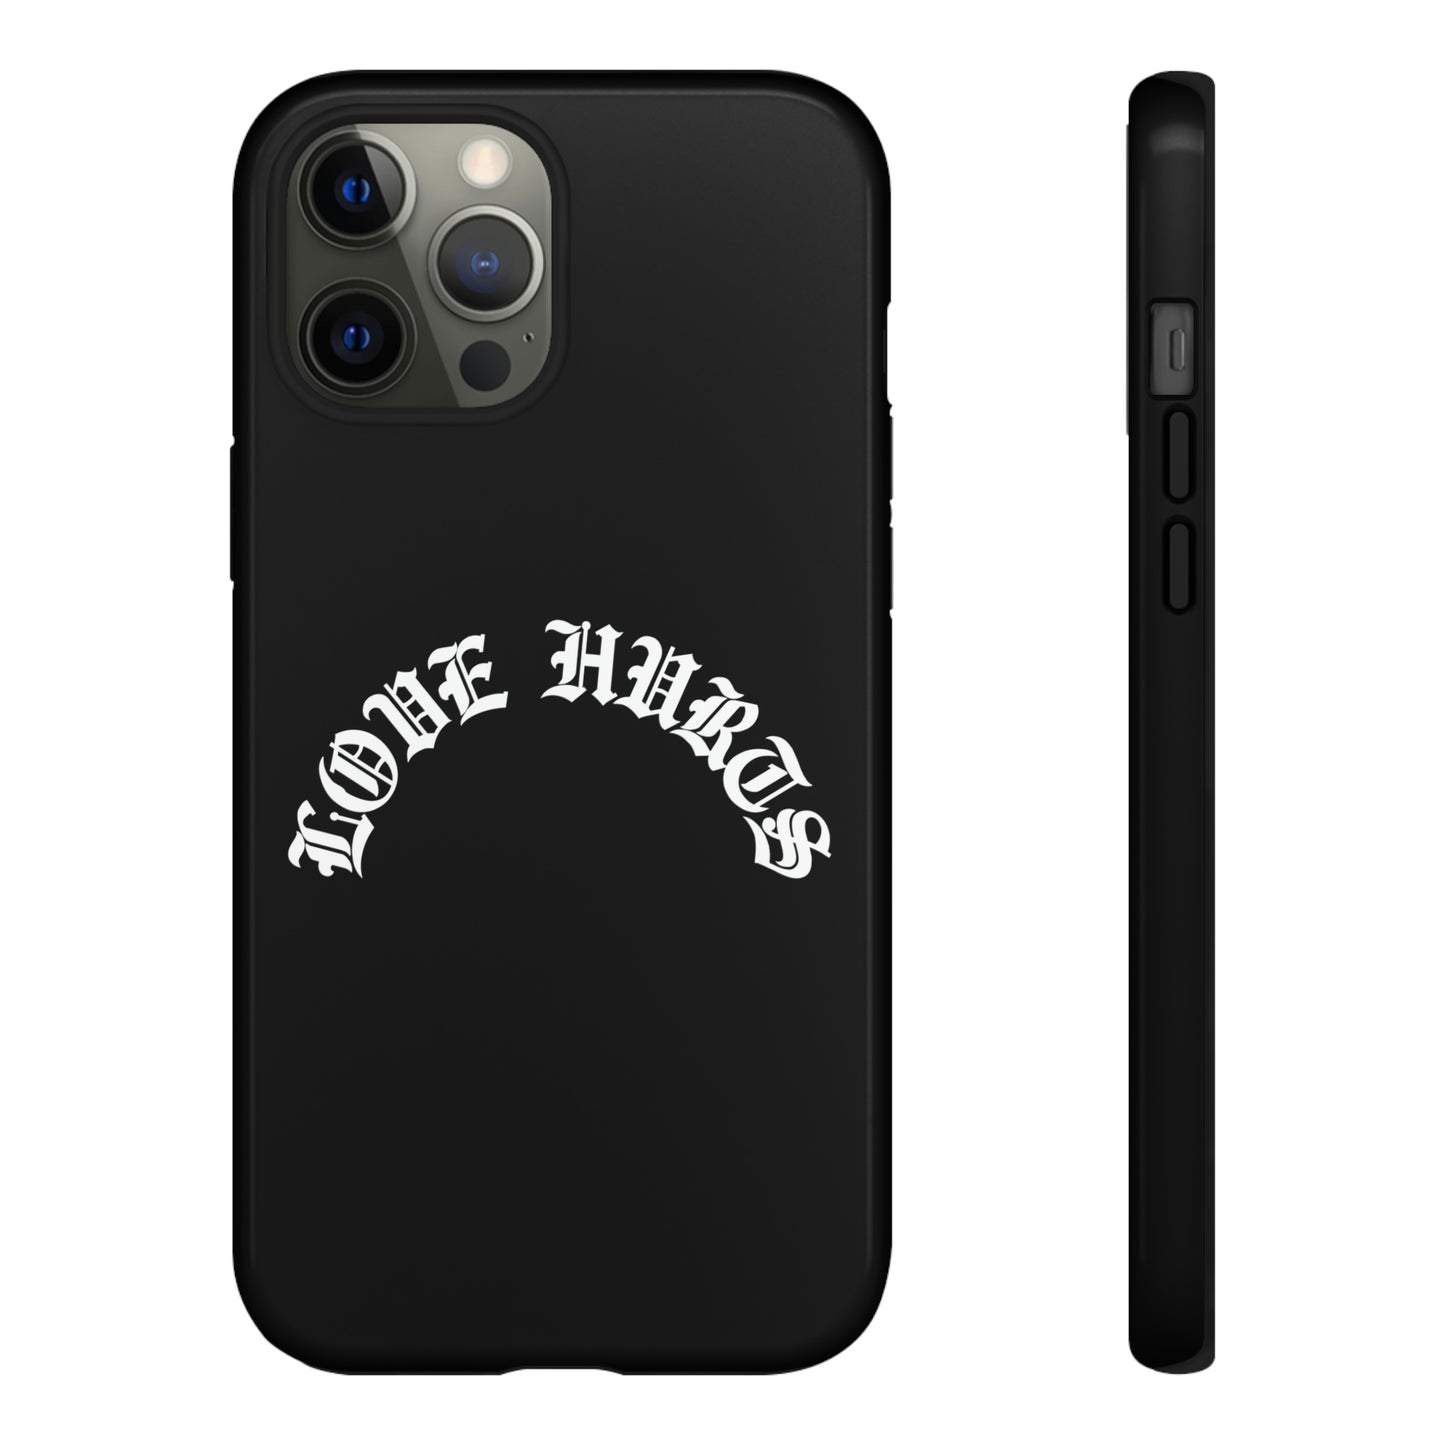 “LOVE HURTS” phone case